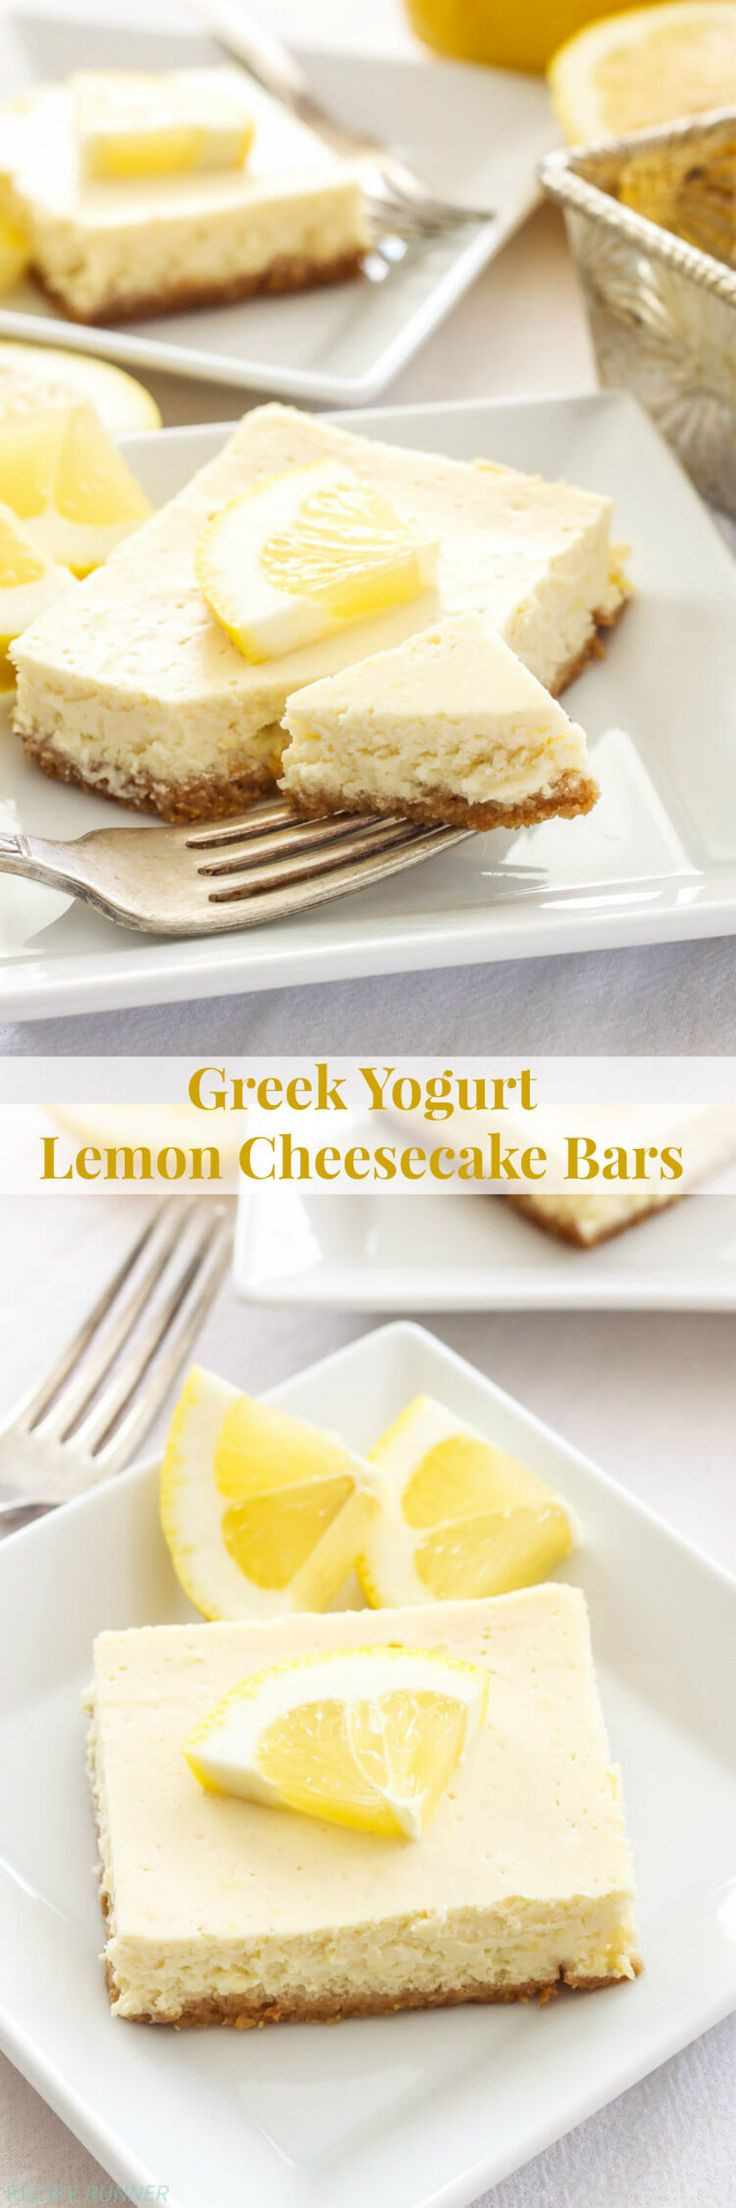 Healthy Lemon Dessert Recipes
 17 Best ideas about Healthy Lemon Desserts on Pinterest